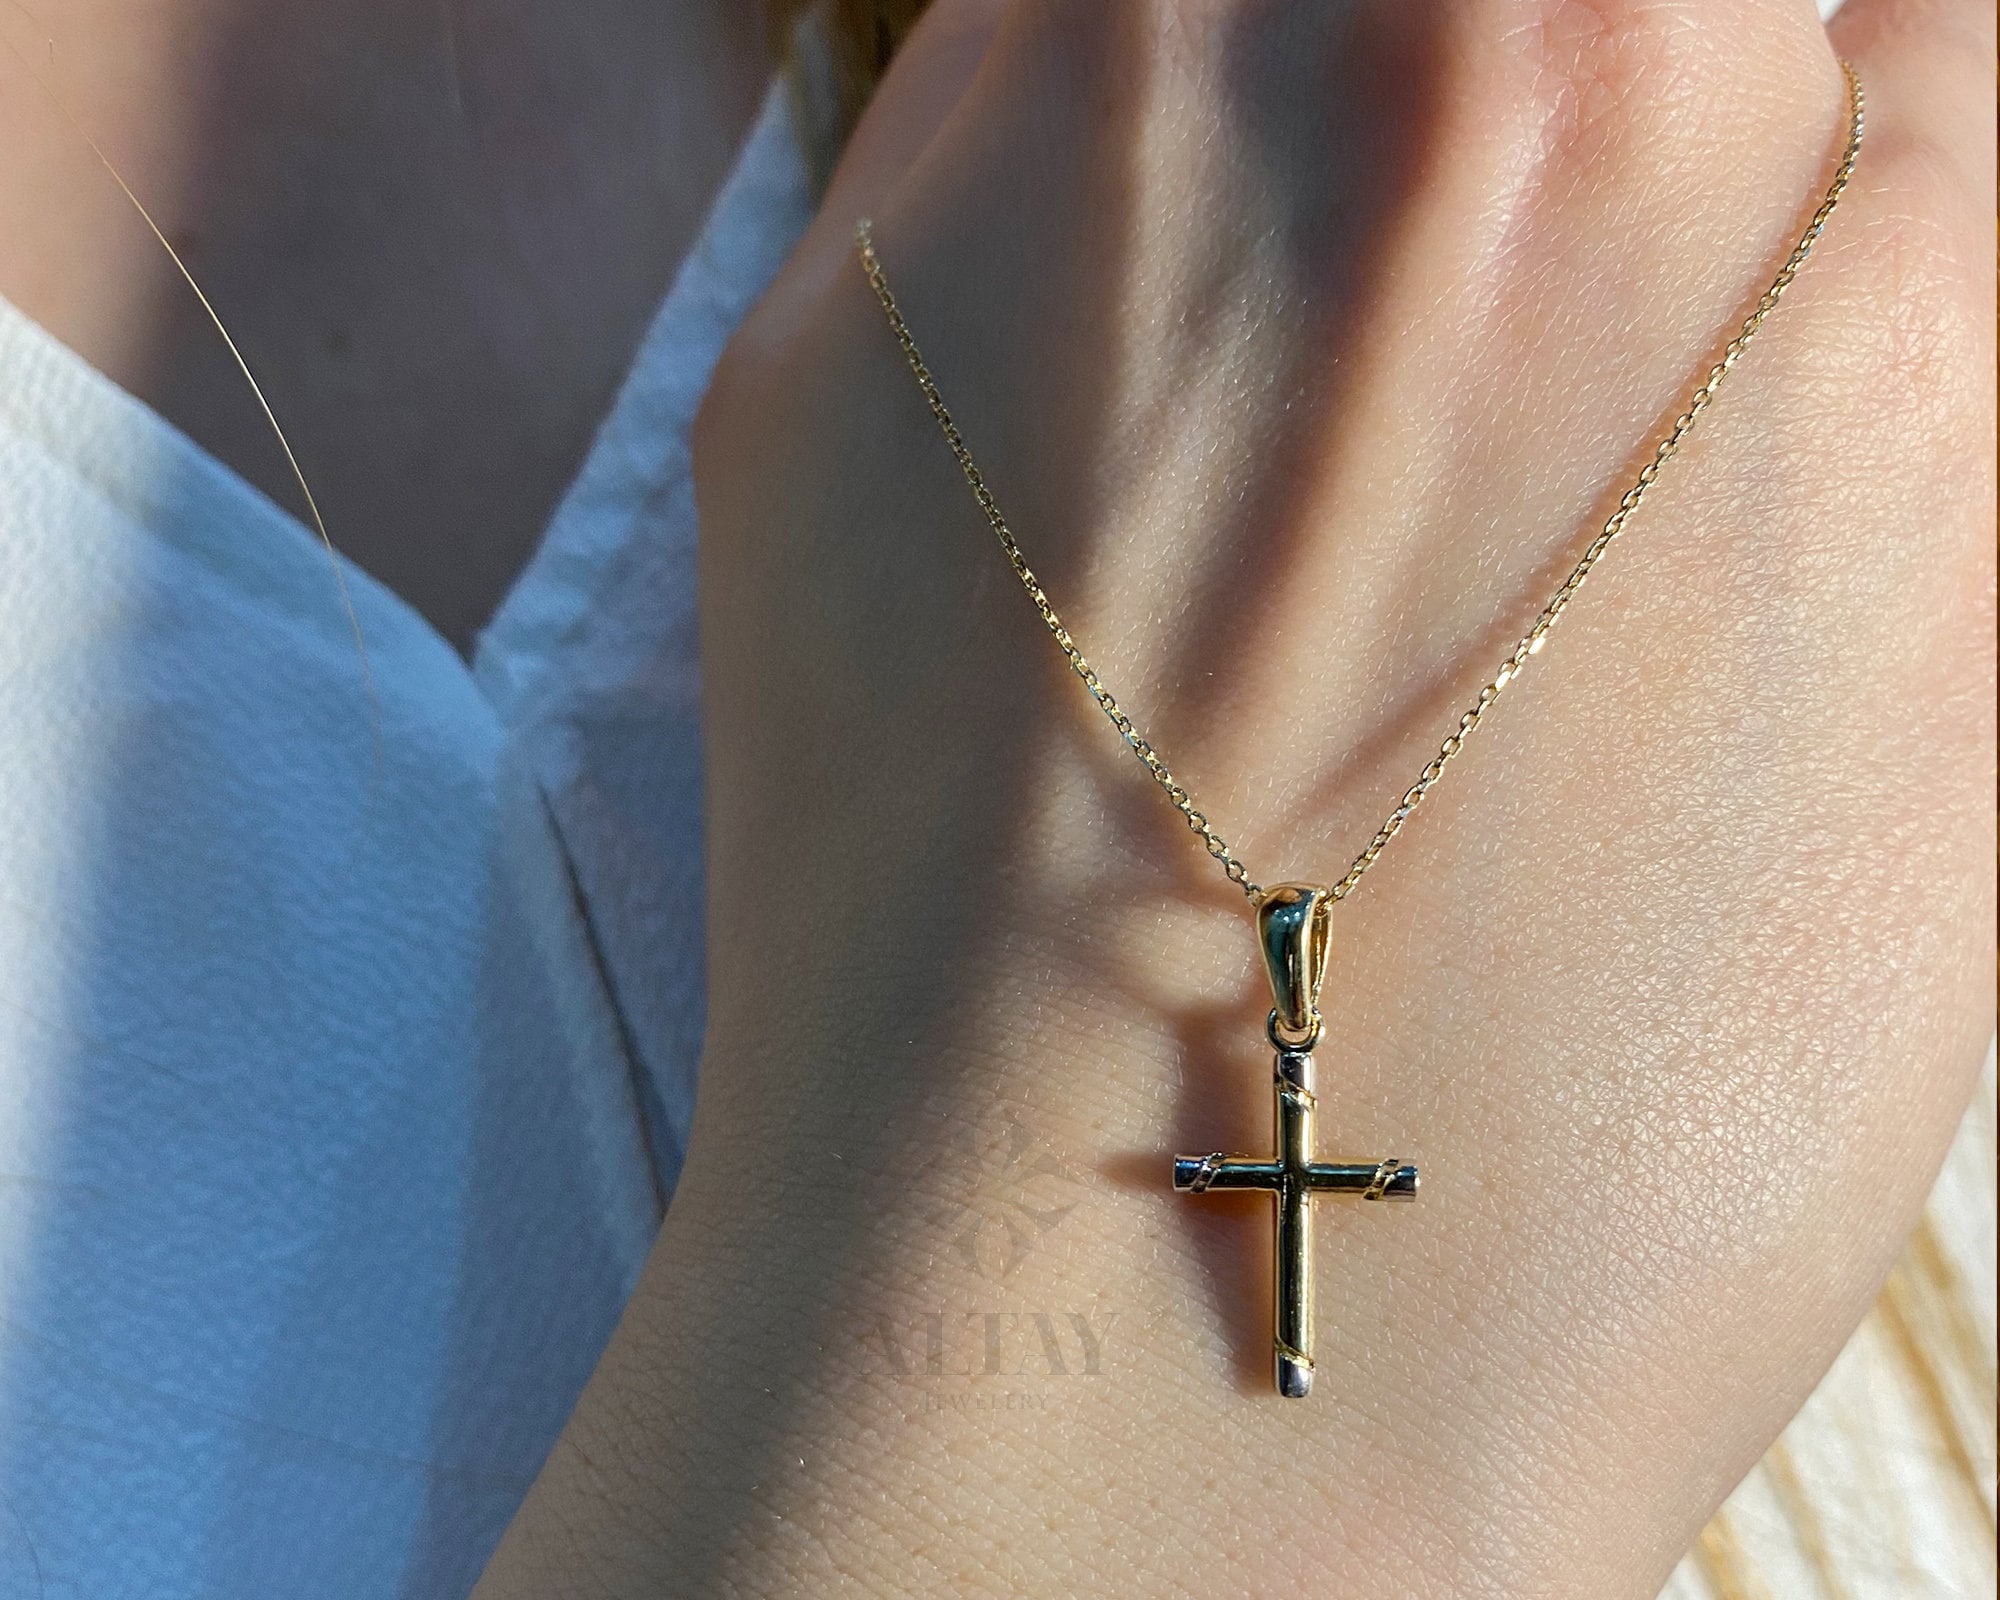 14K Gold Cross Necklace, Crucifix Pendant Chain, Jesus Christ Religious Jewelry, Christening, Dainty Cross Charm, Christian Two-Tone Pendant